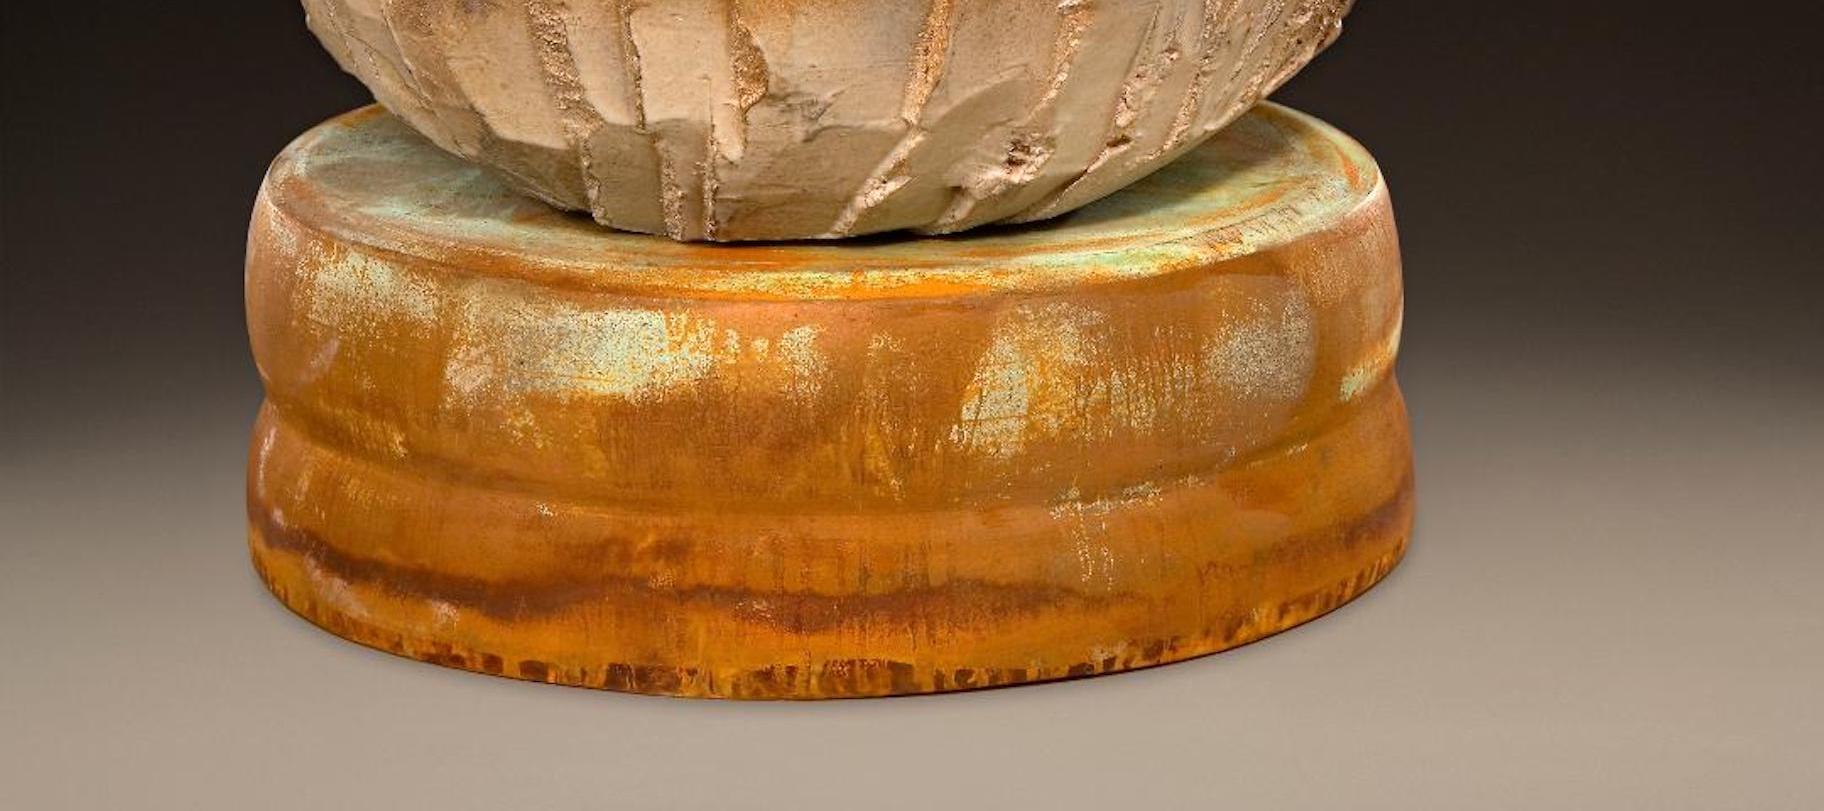 Glazed Richard Hirsch Ceramic Altar Bowl with Ladle #3, 2007 For Sale